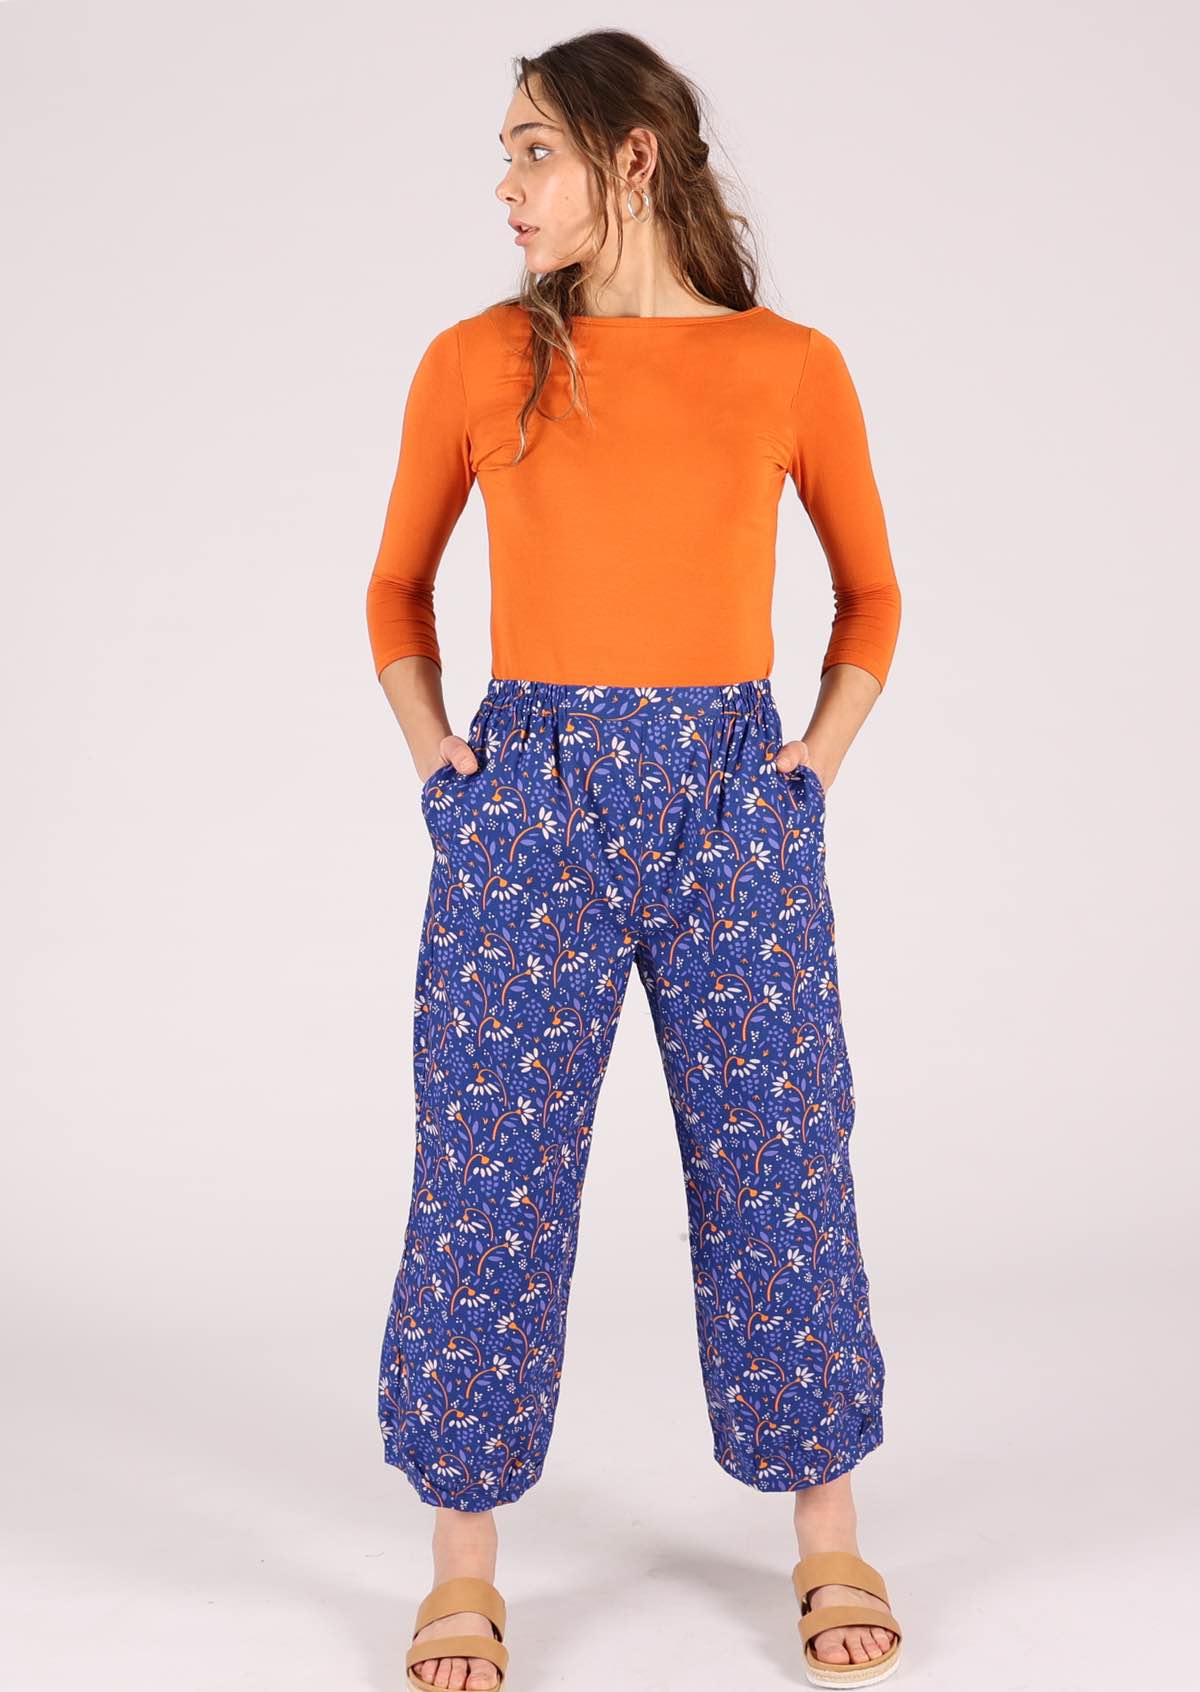 high waisted pants with daisy print on vibrant blue base